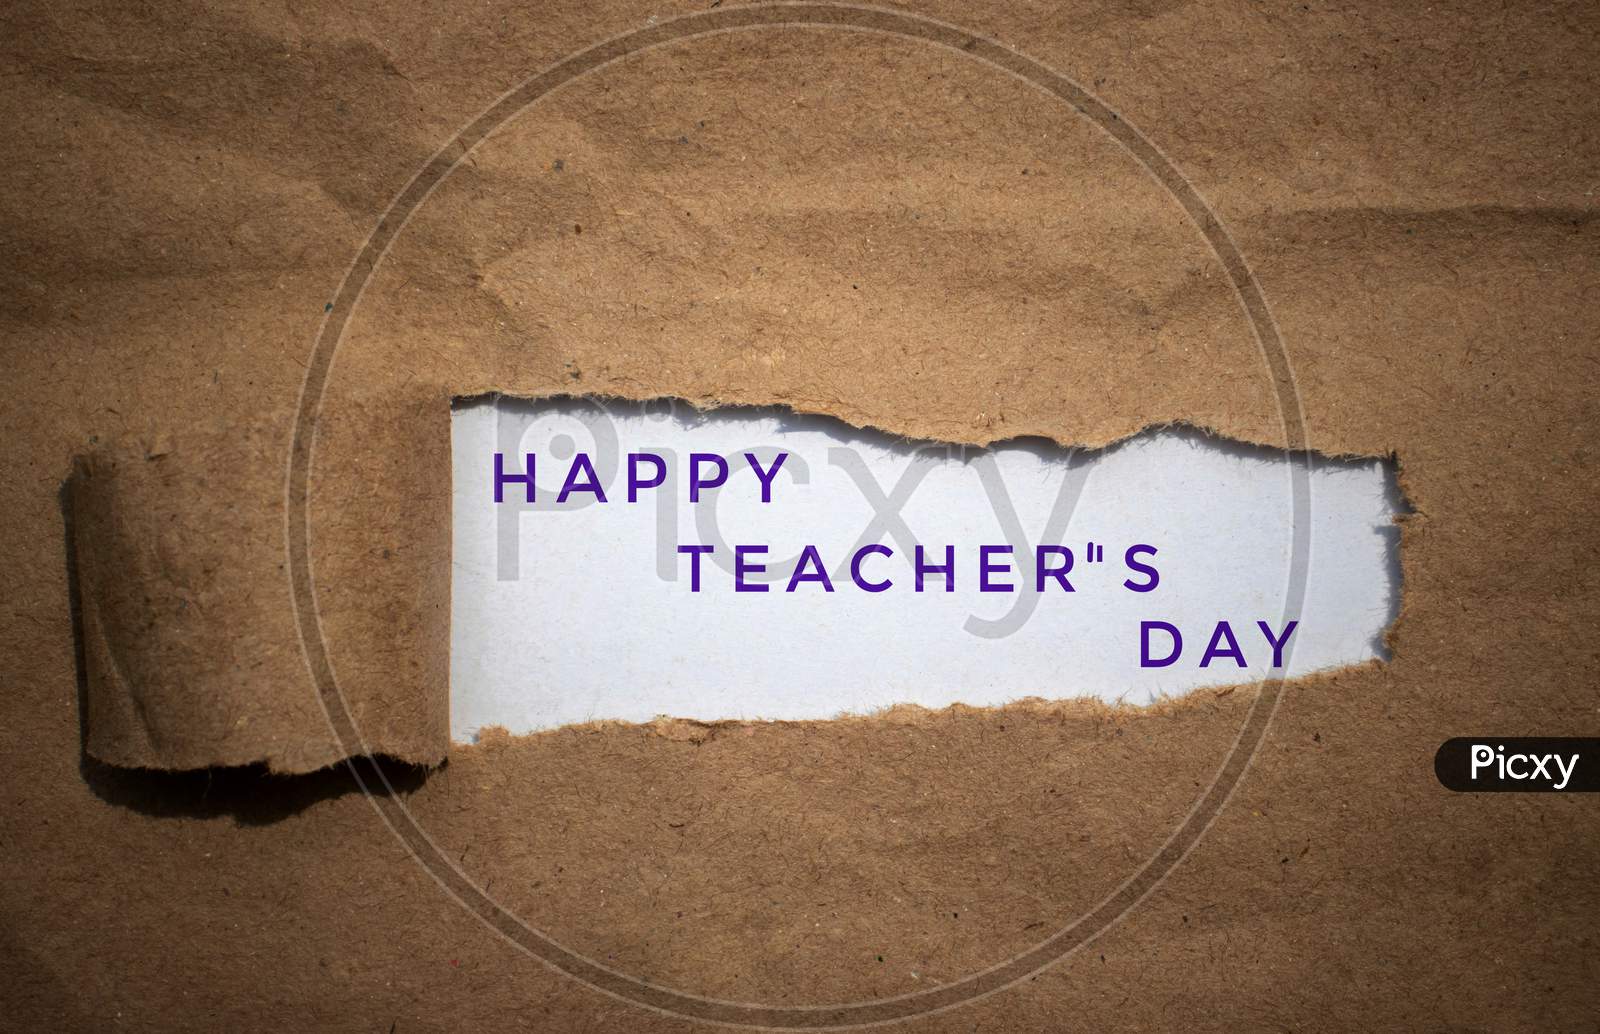 Happy Teacher'S Day Wish Written Amid Torn Paper